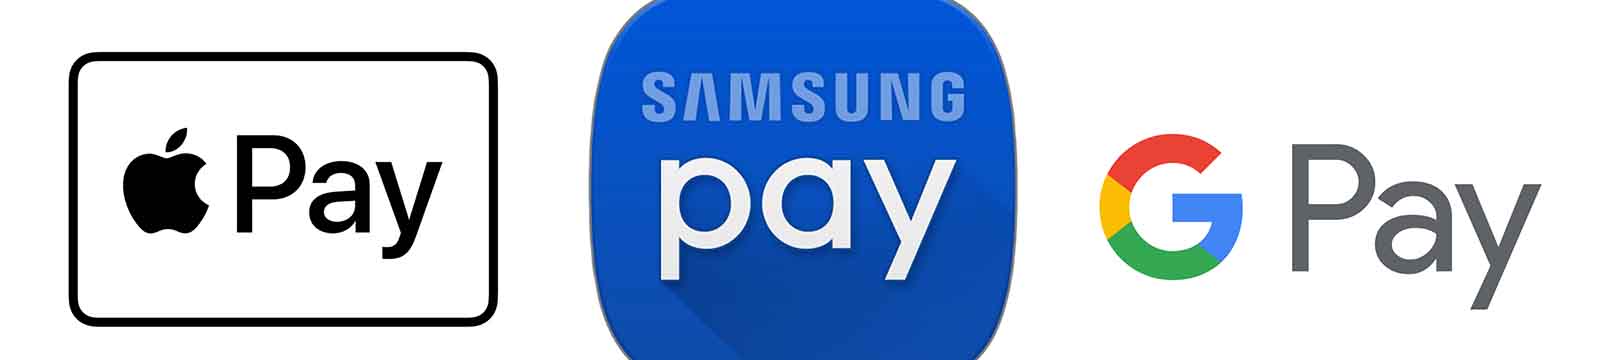 Apple pay, Samsung Pay, and Google Pay logos